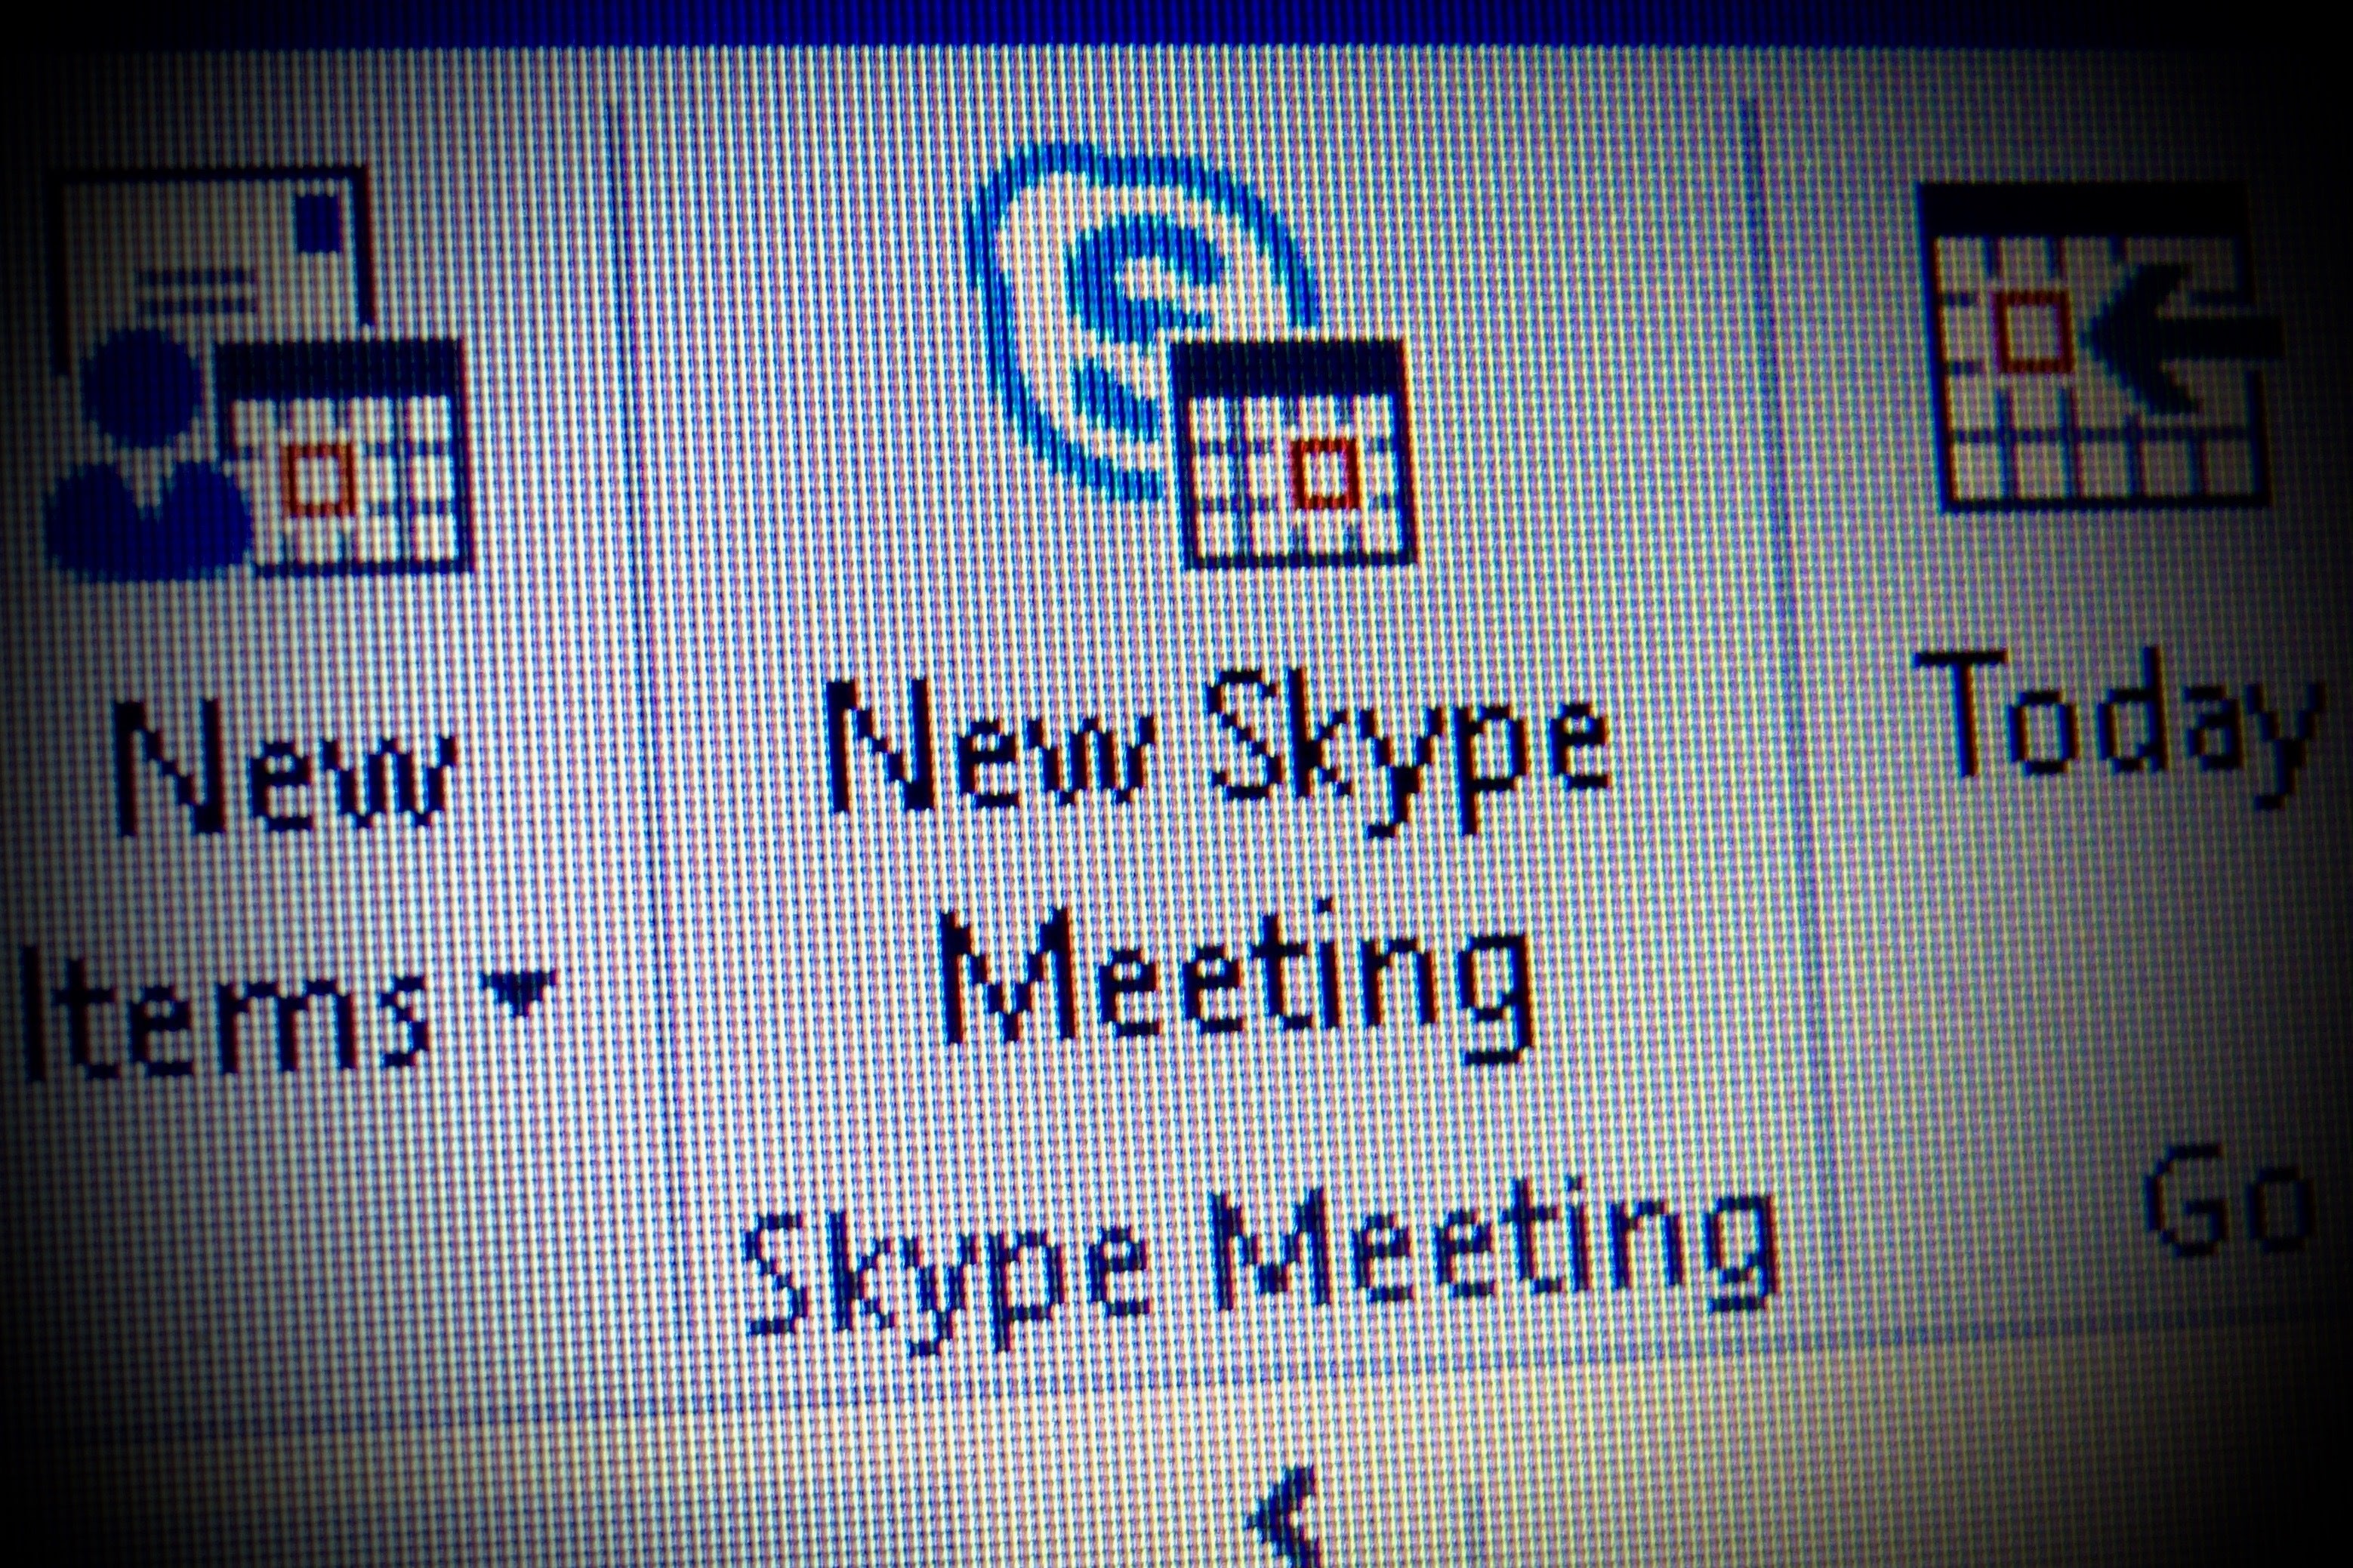 skype for business mac see group members